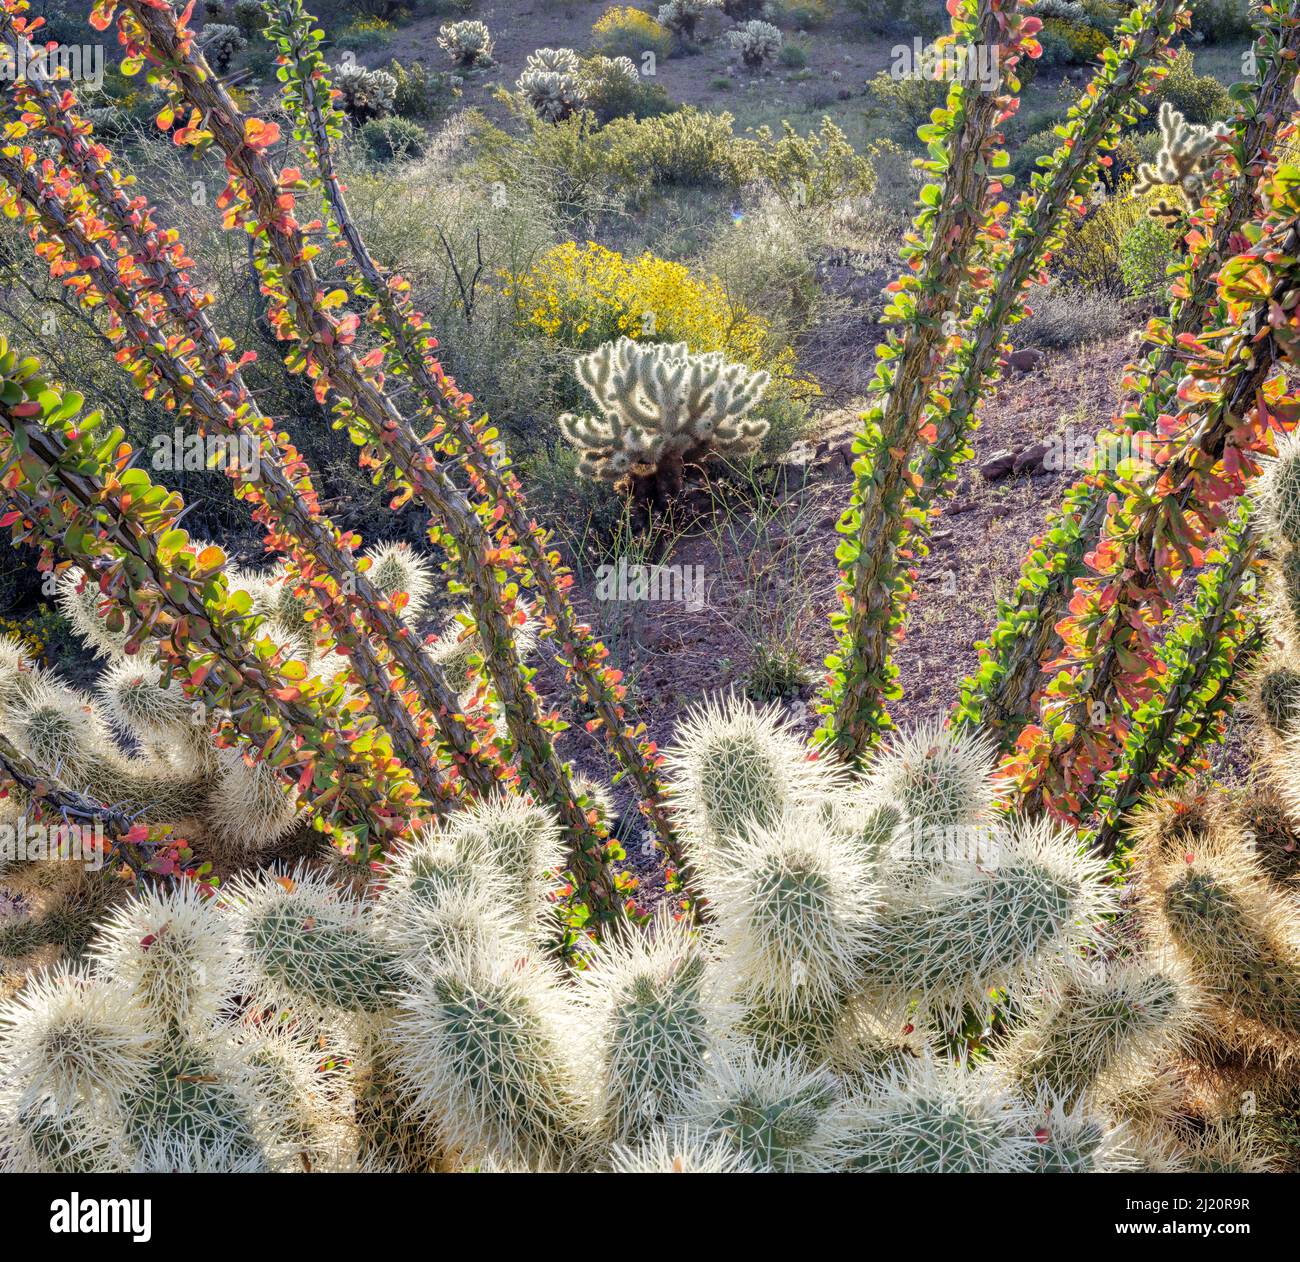 Teddy bear cholla (Cylindropuntia bigelovii) cacti and Ocotillo (Fouquieria splendens) with flowering Brittlebush (Encelia farinosa) in background, in Stock Photo